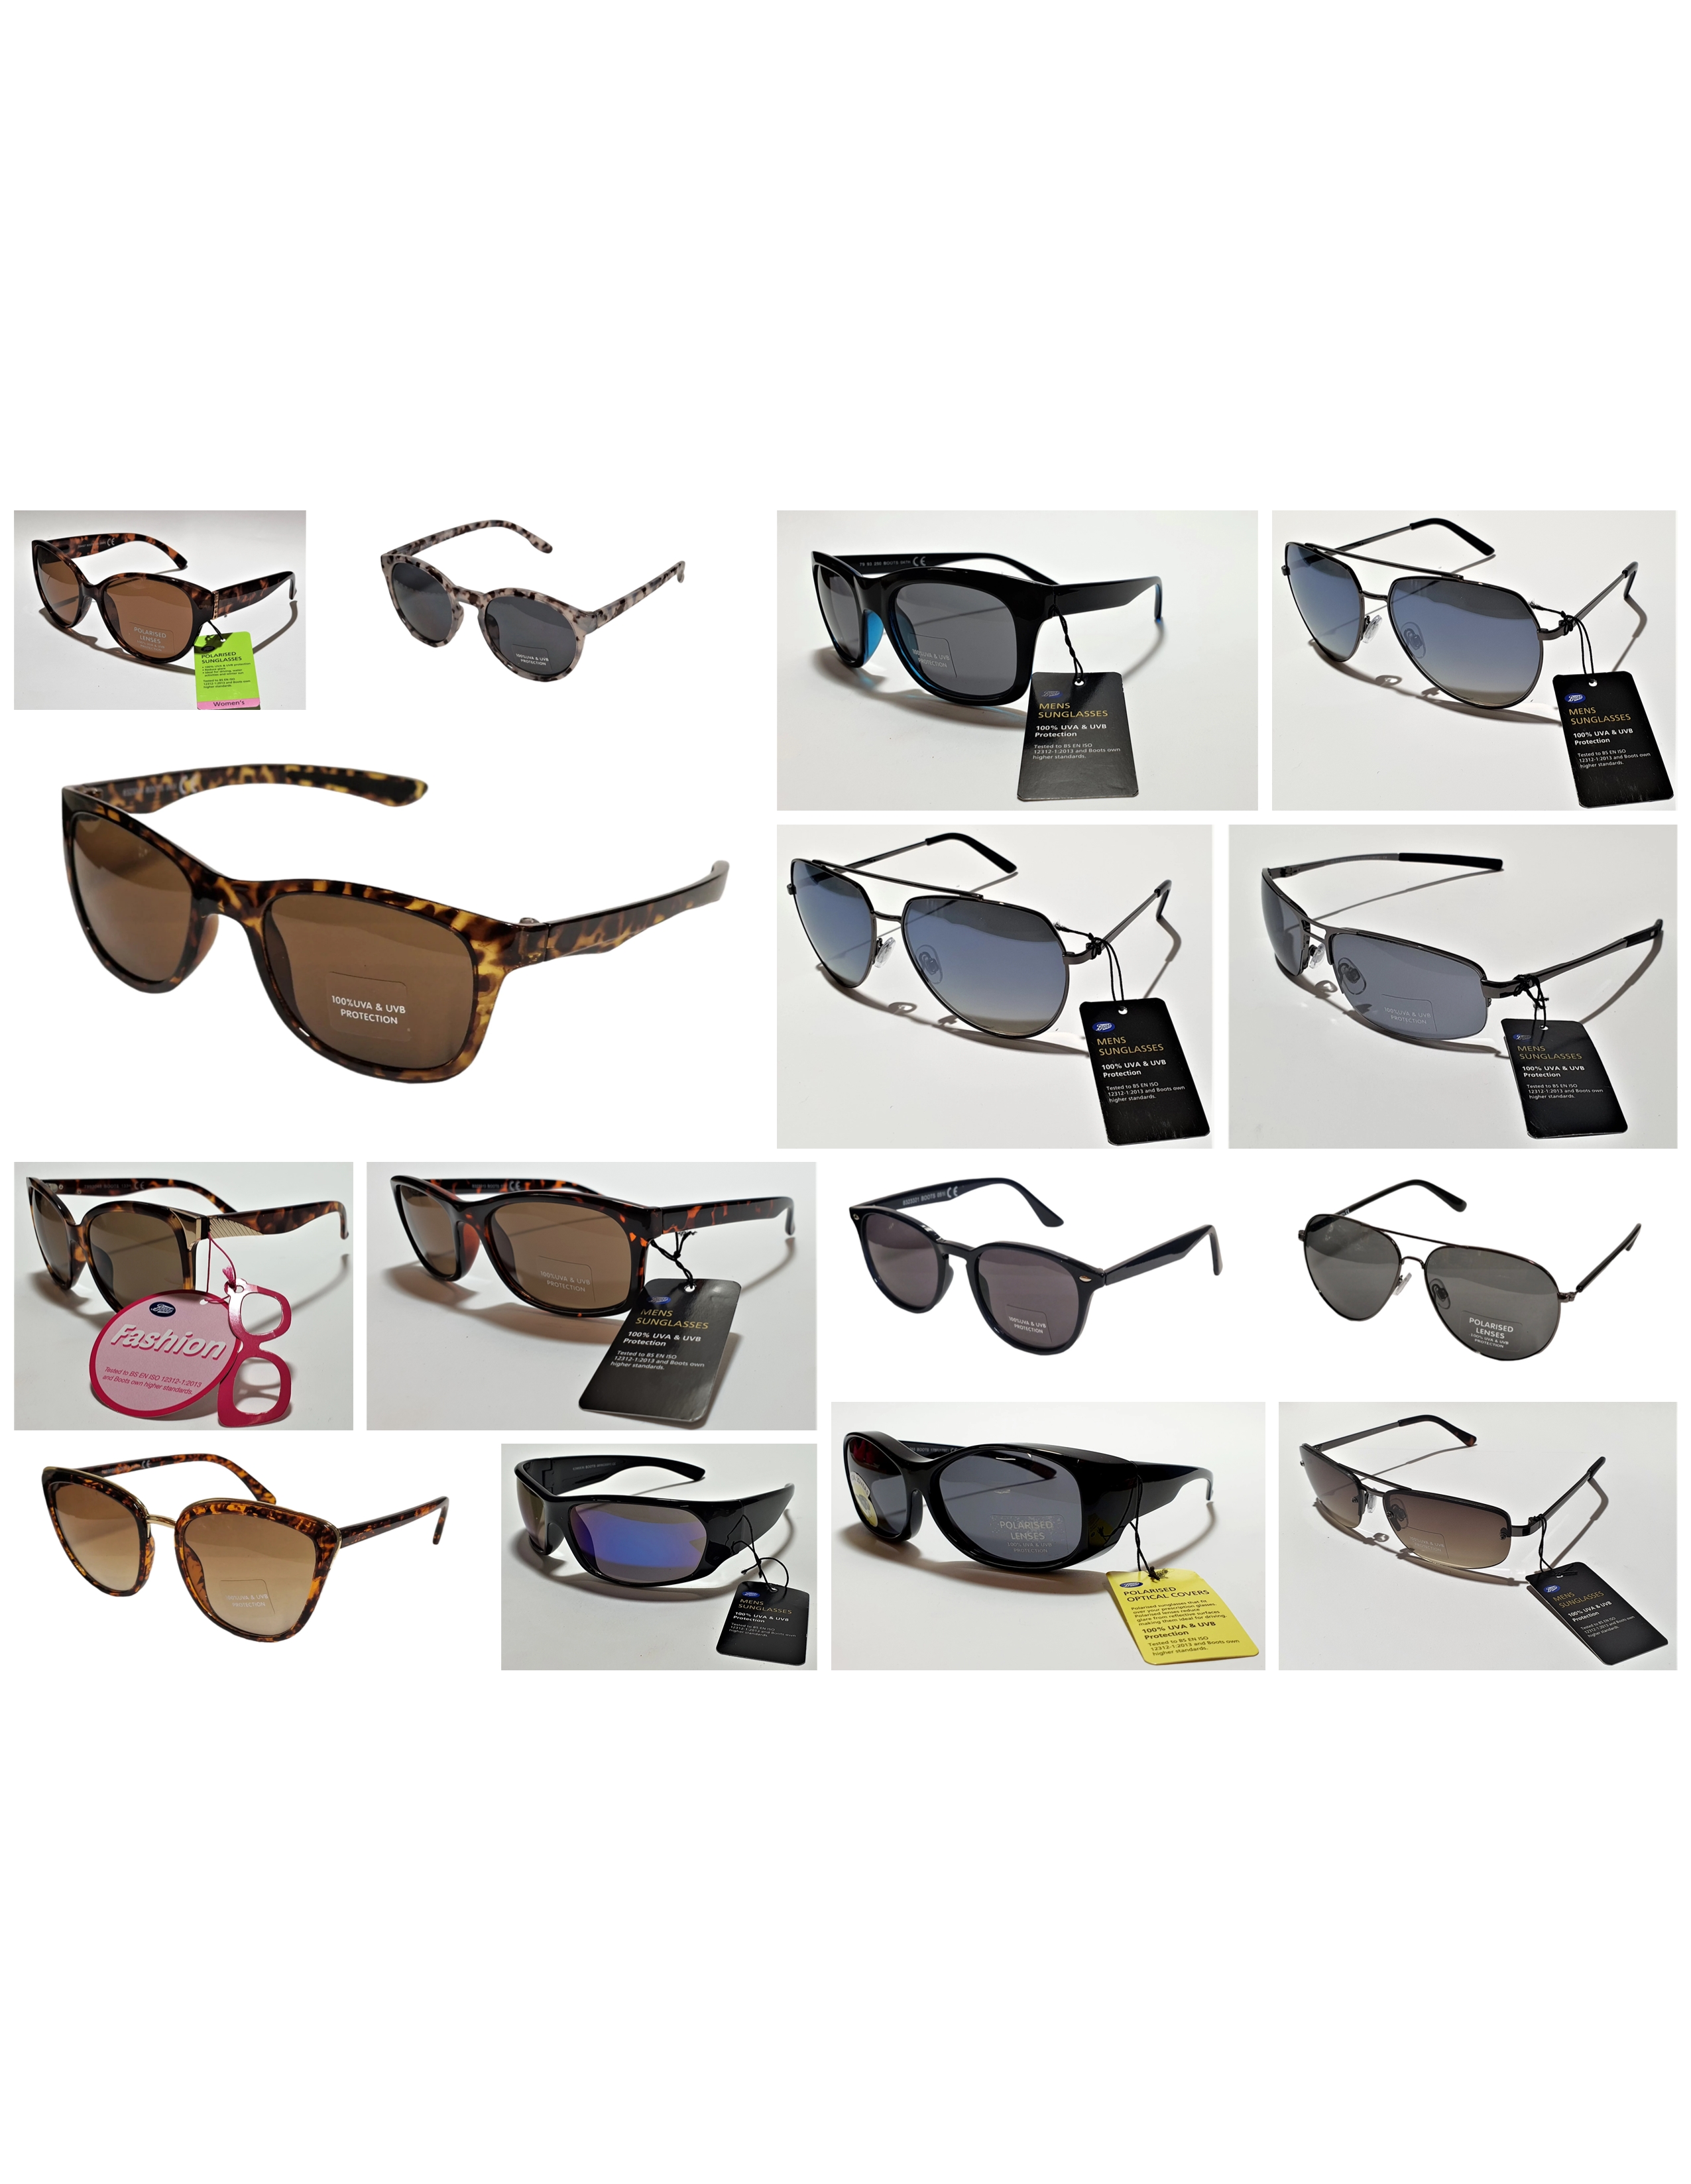 Ex-chain Store Sunglasses fantastic opportunity